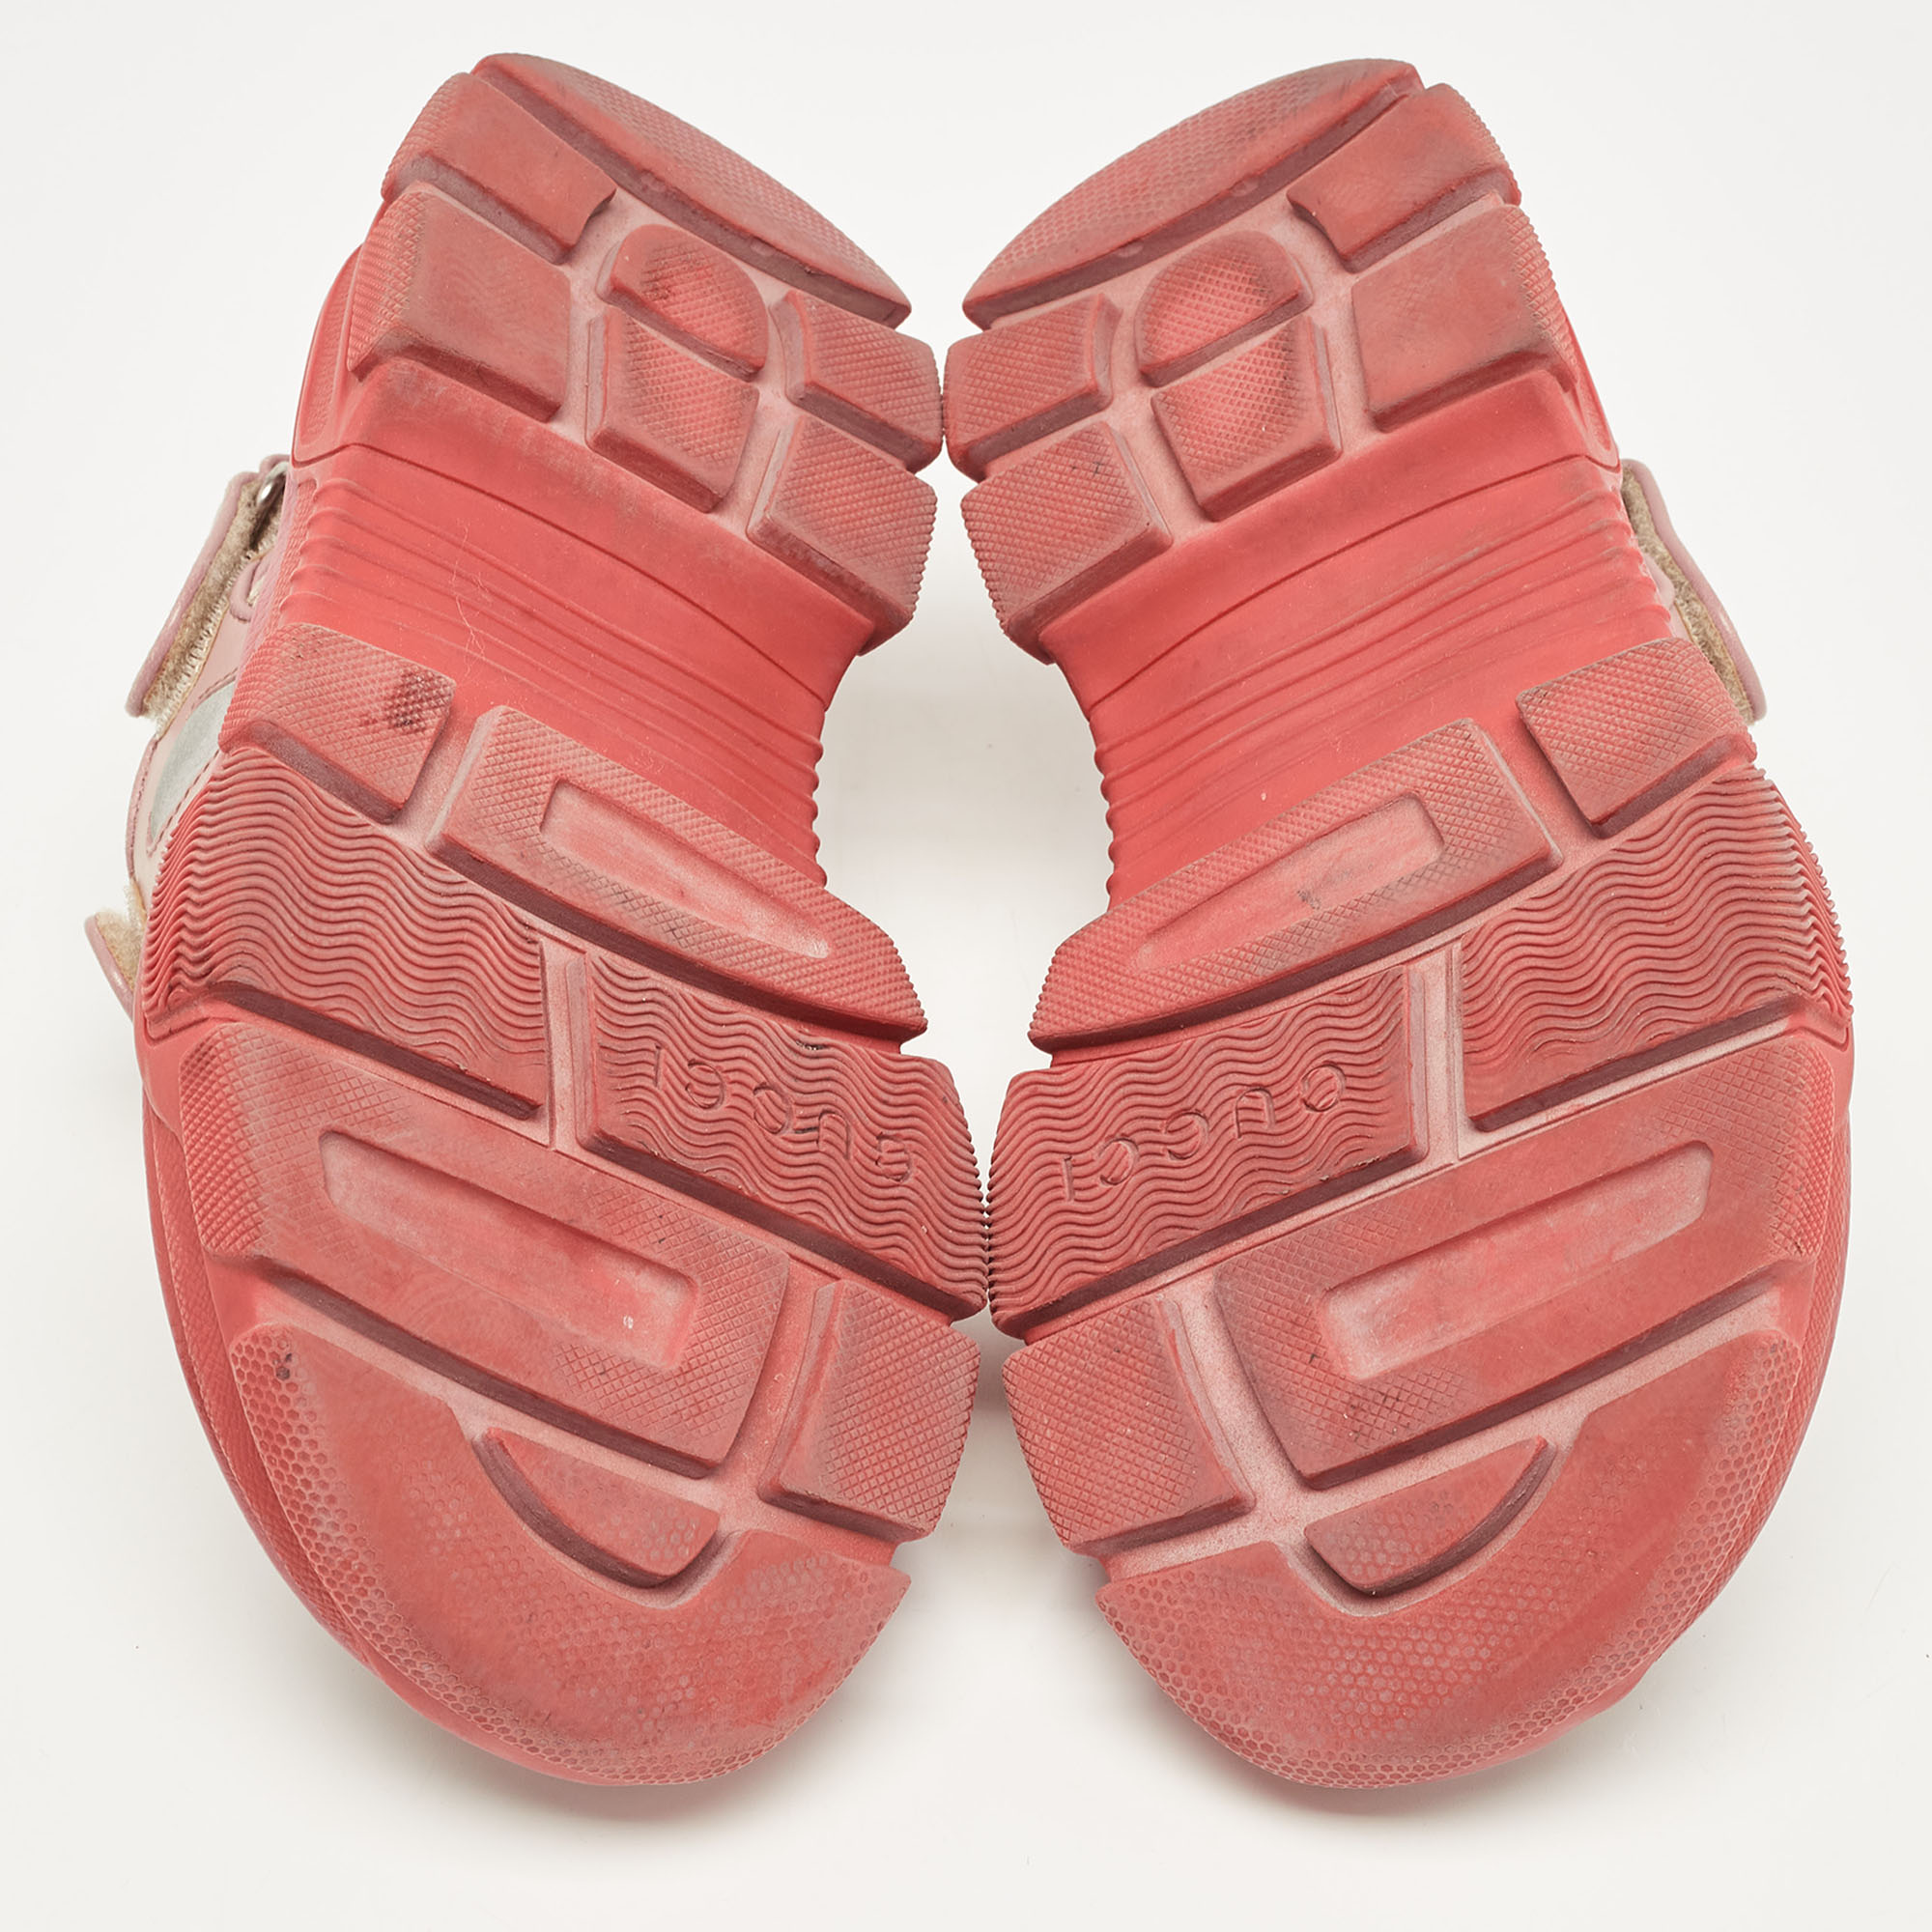 Gucci Beige/White Leather And Mesh Sega Velcro Slingback Sandals Size 36